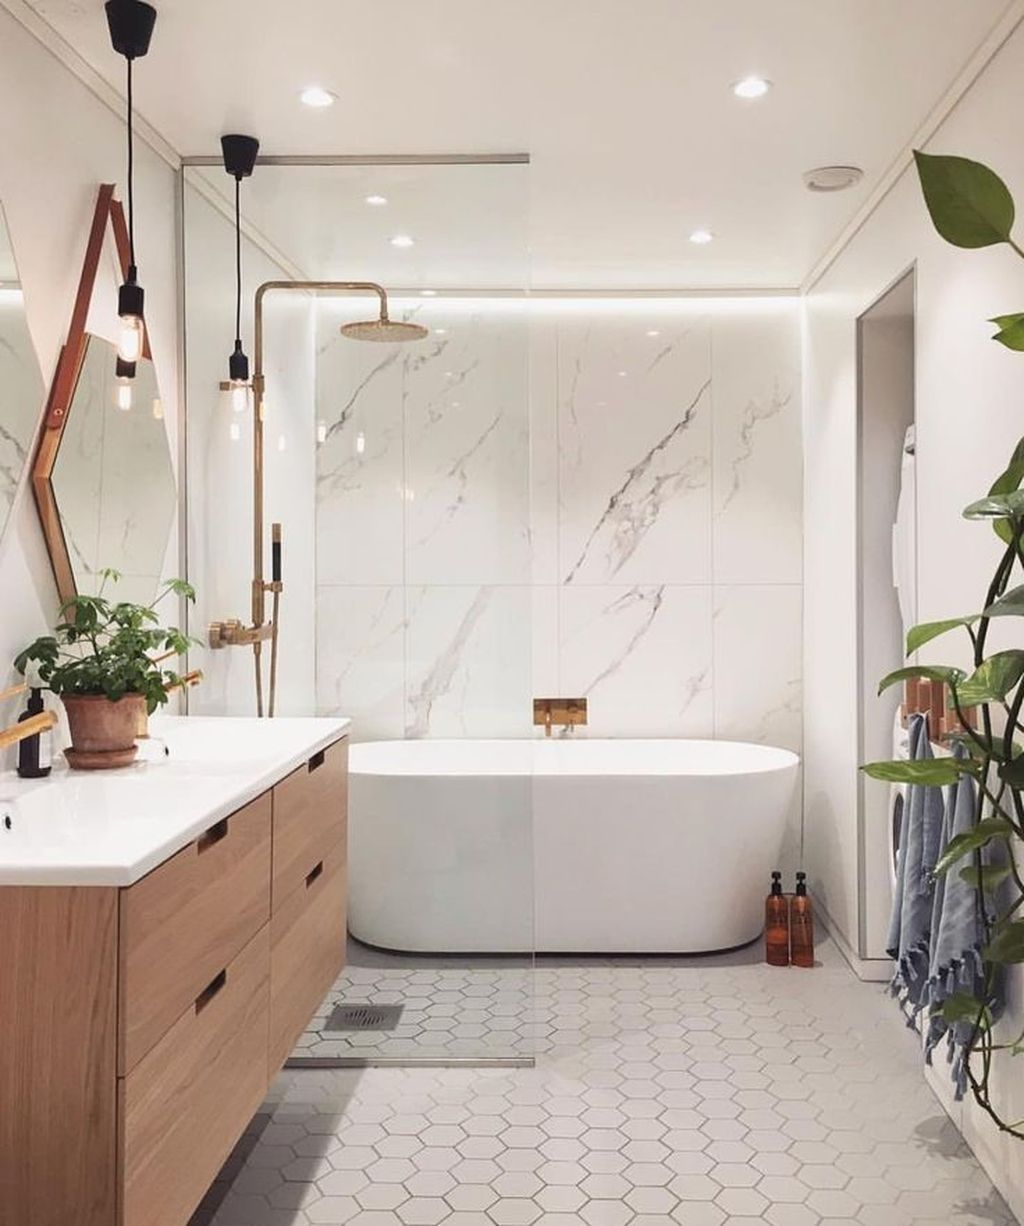 30+ Excellent Bathroom Design Ideas You Should Have